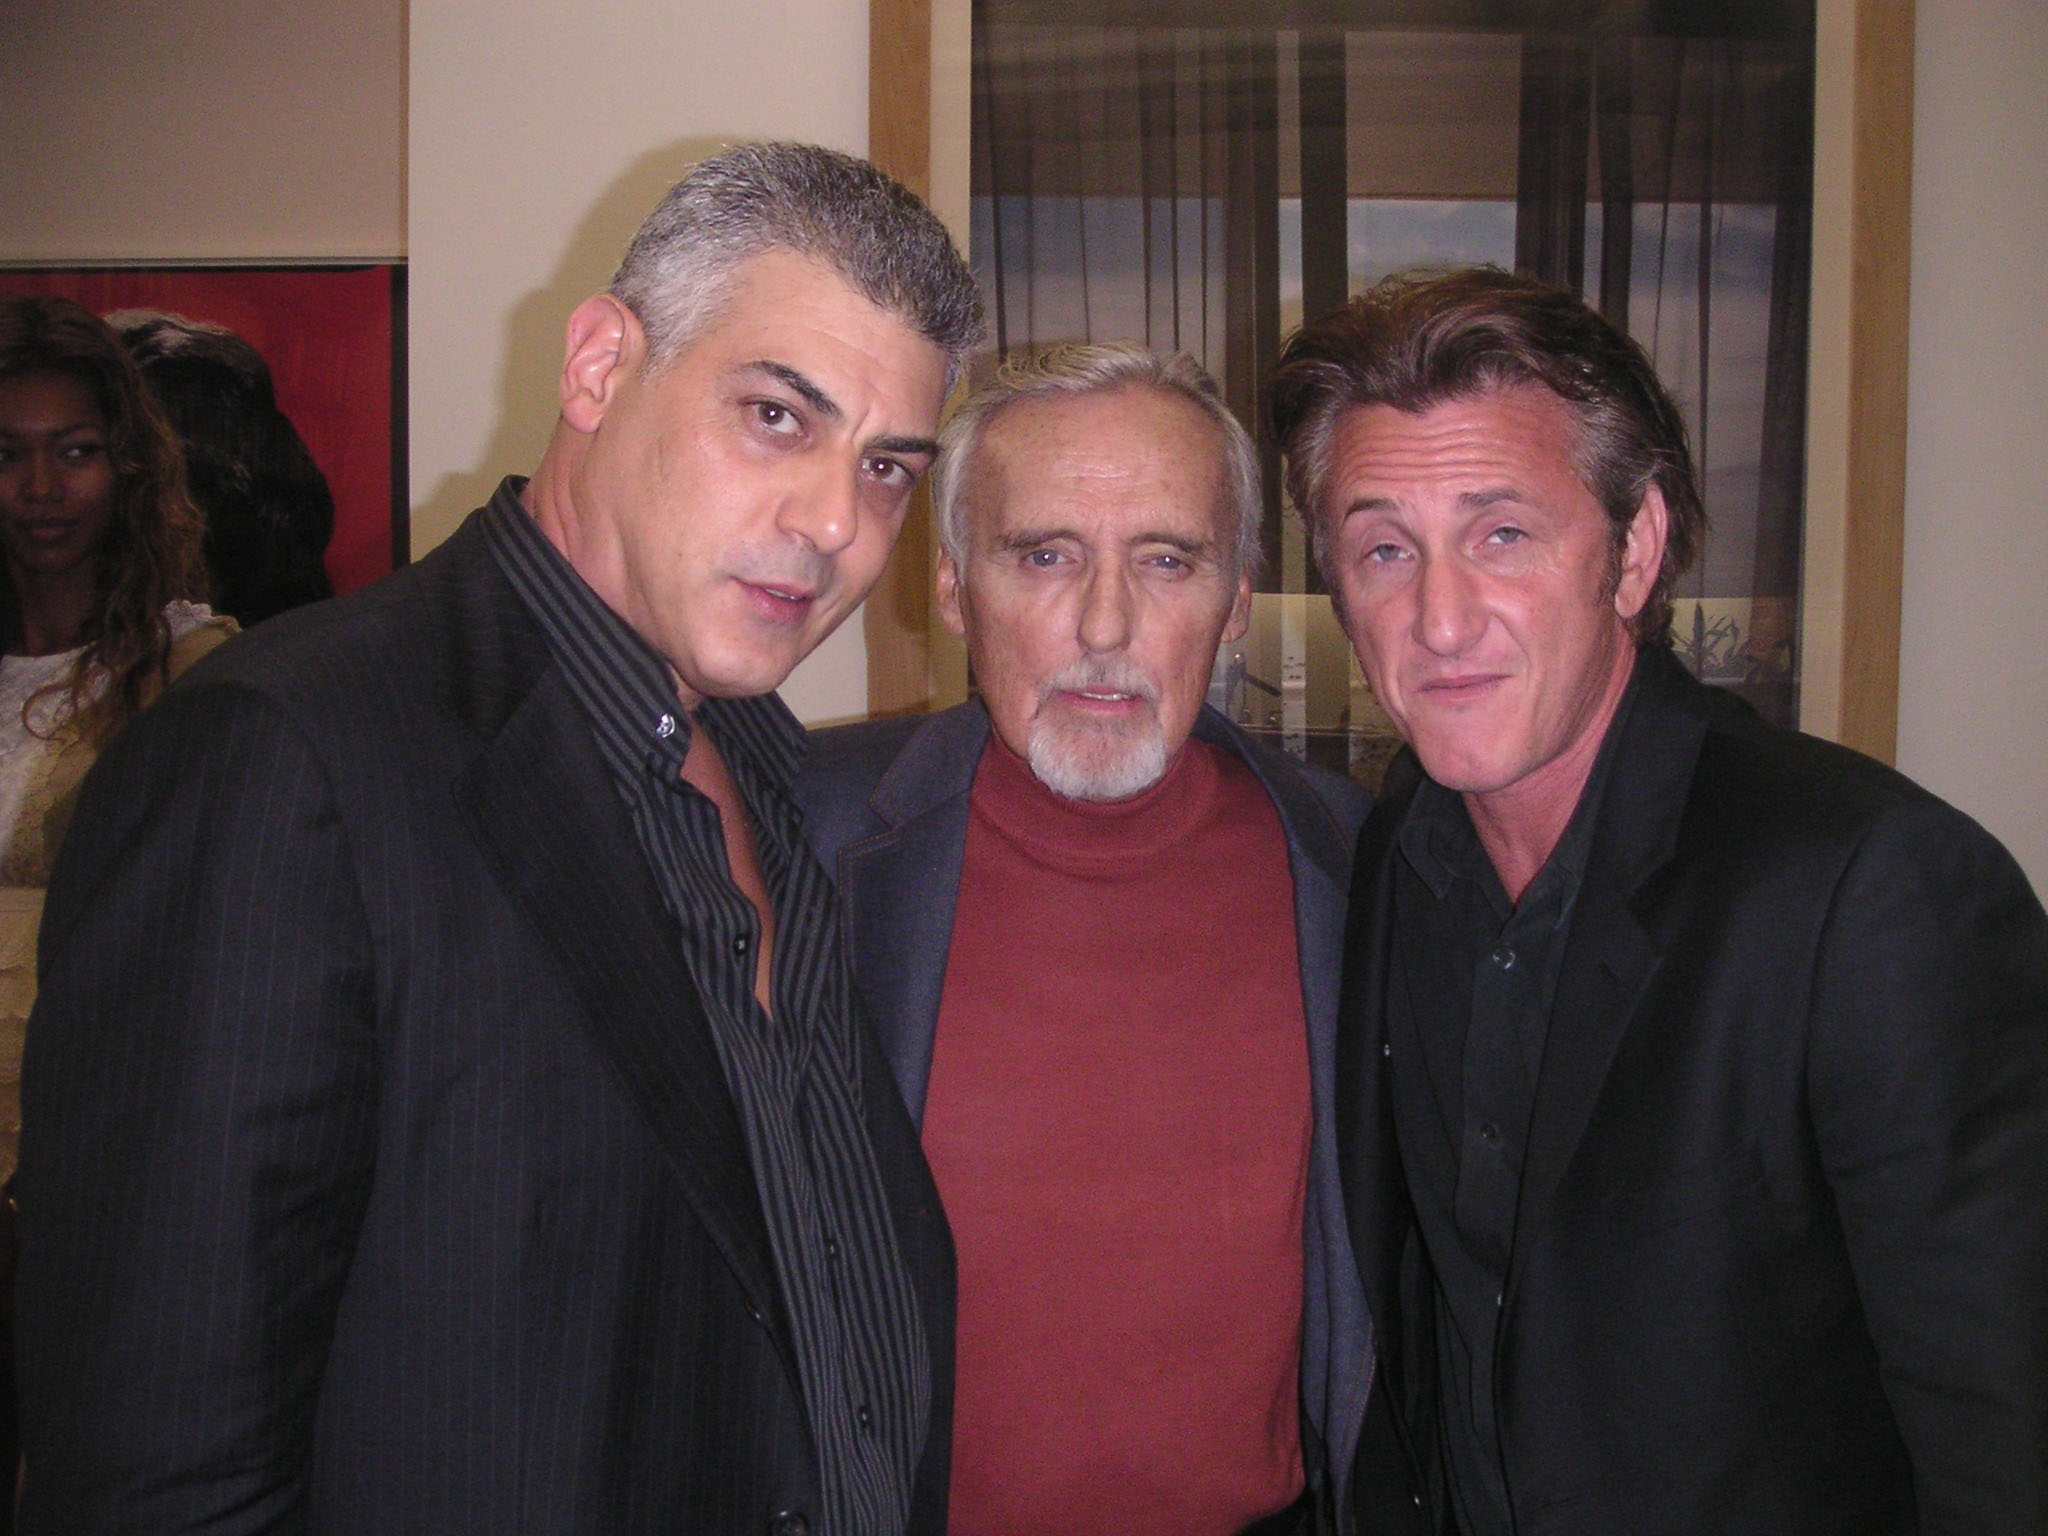 Peter Rafelson with friends, Dennis Hopper and Sean Penn